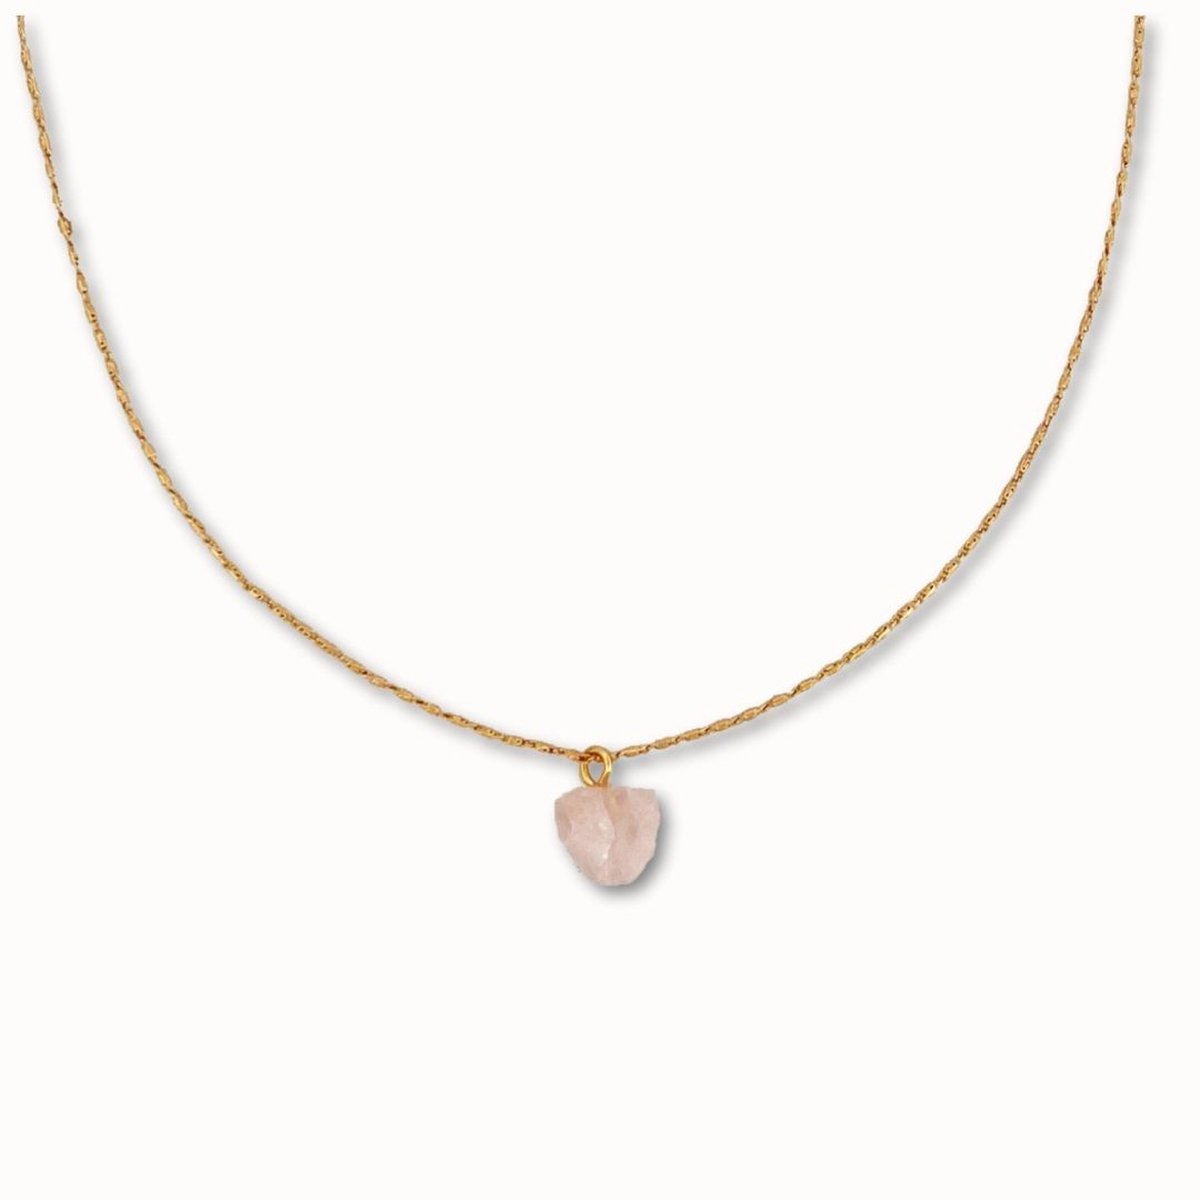 ByNouck Jewelry - Necklace Rosequartz Stone - Ketting - Gold Plated - Rozenkwarts - ByNouck